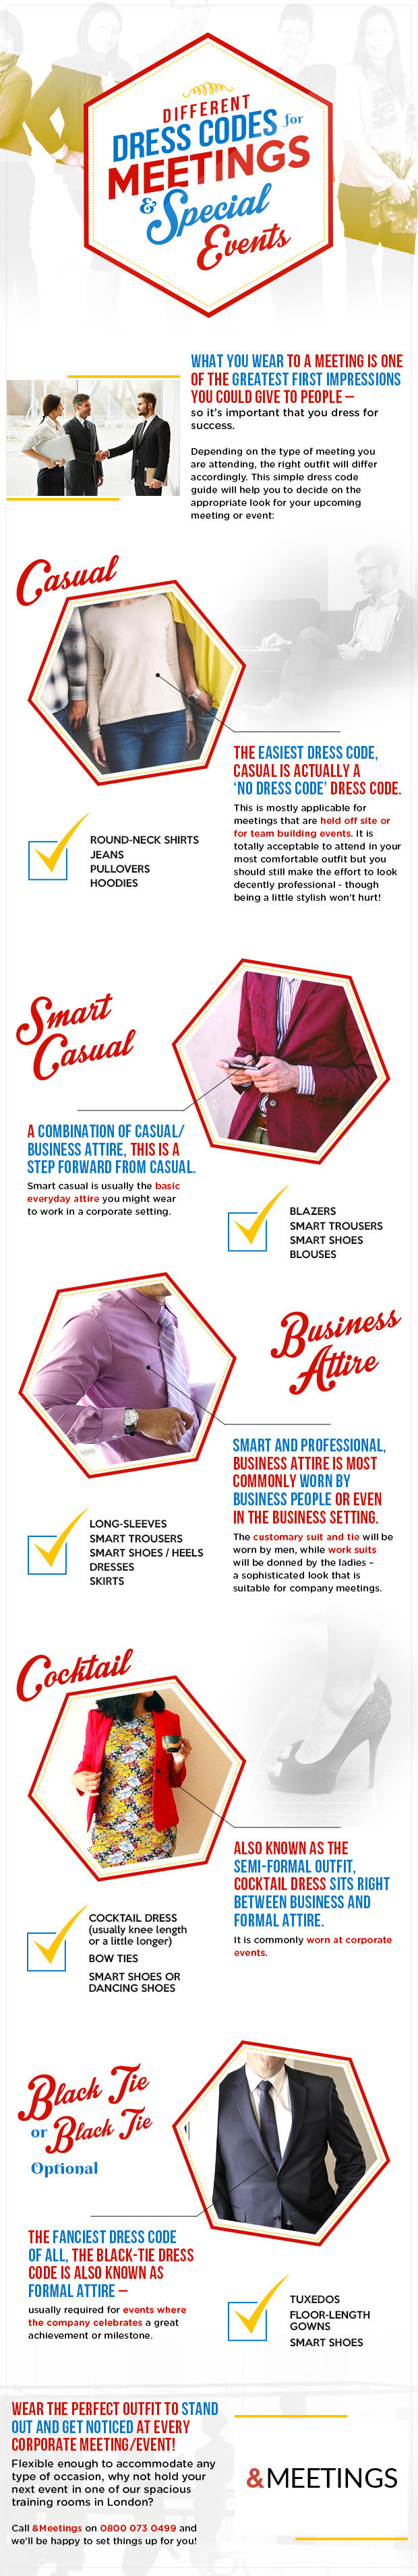 How to dress as a manager | Business dress code, Dress codes, Business  attire women